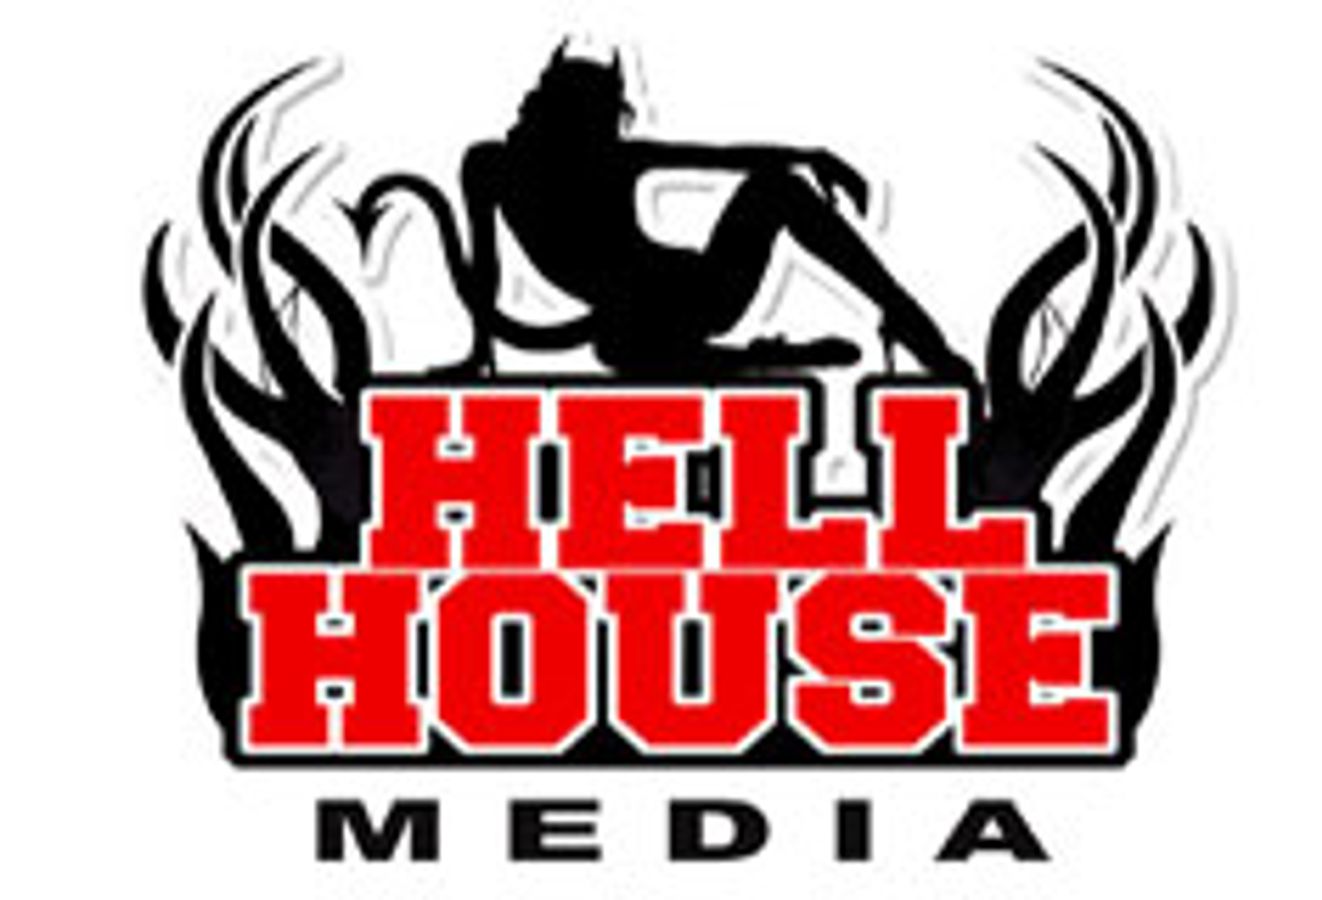 HellHouse Media